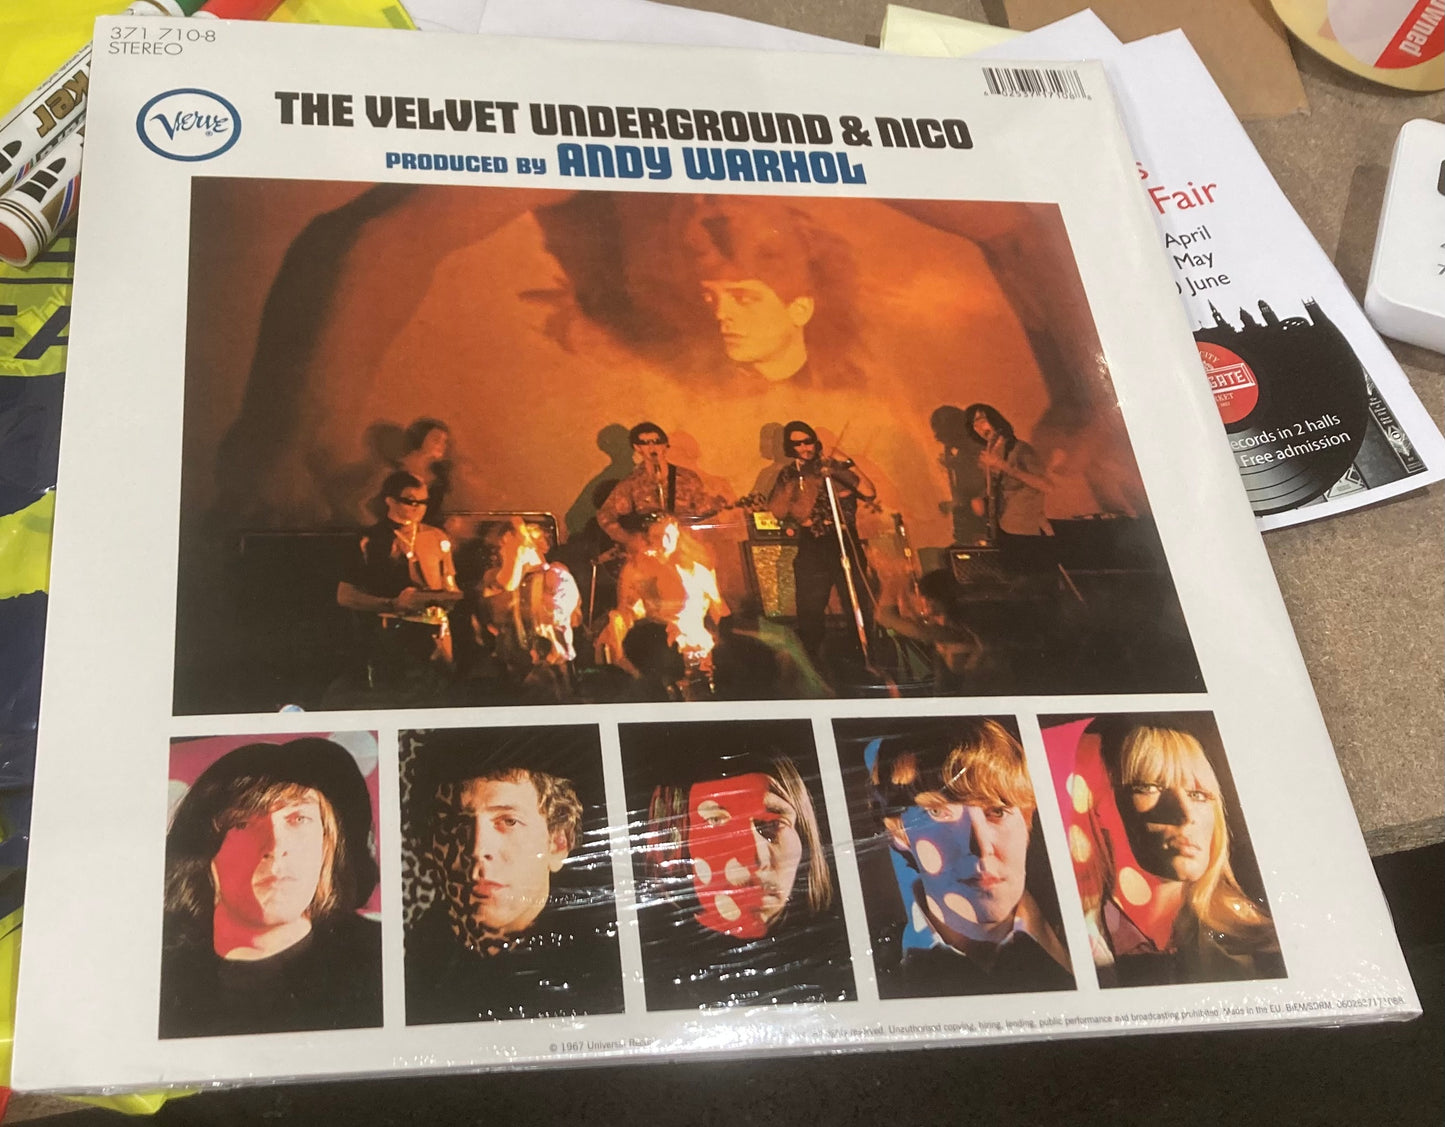 The back of ‘Velvet Underground and Nico’ on Vinyl